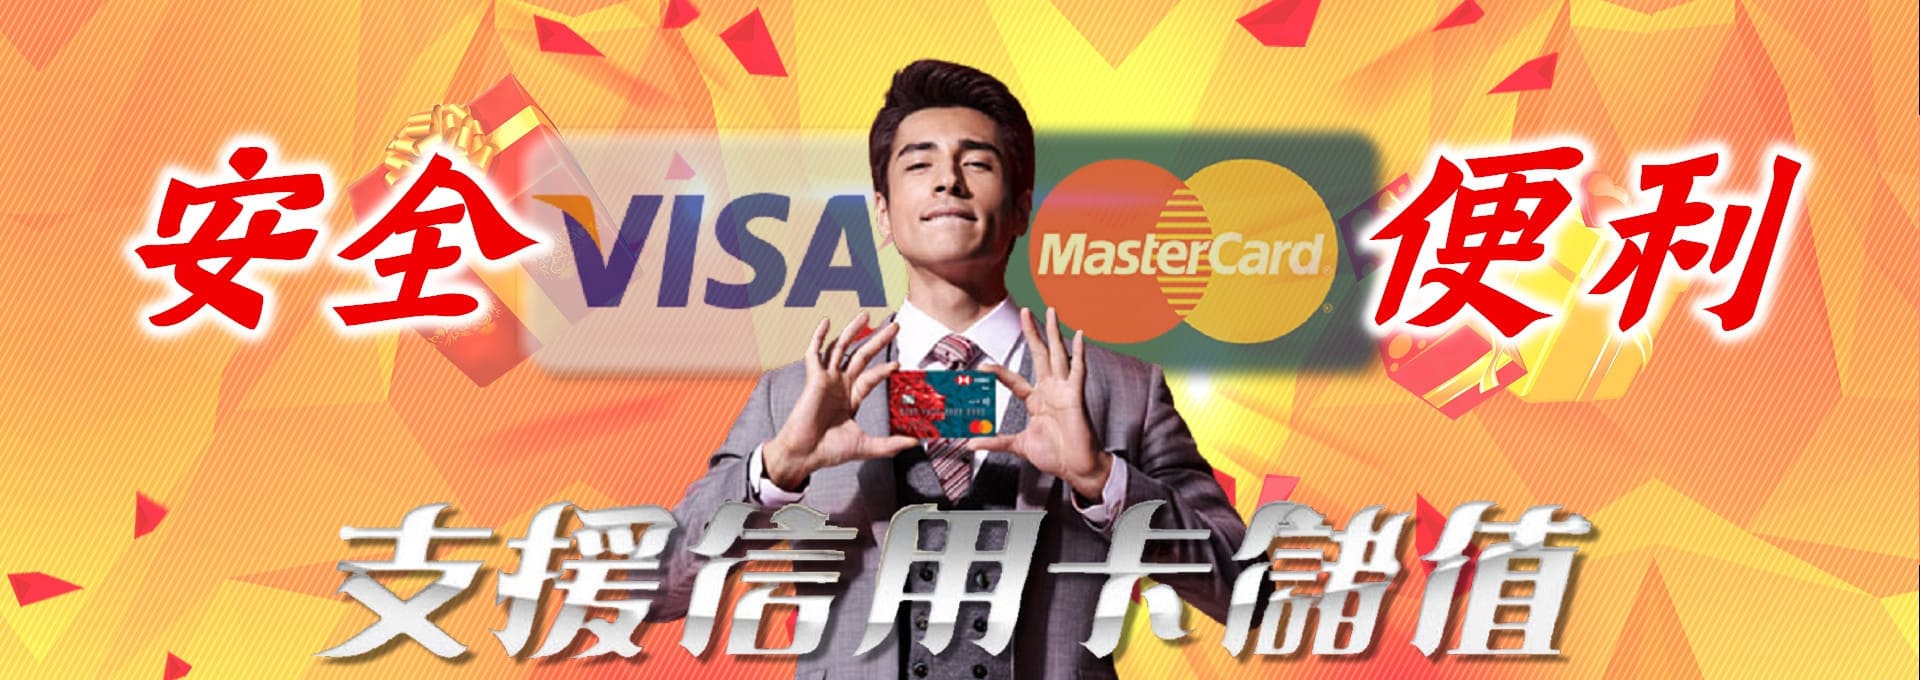 TU娛樂城 - 安全便利支援信用卡儲值